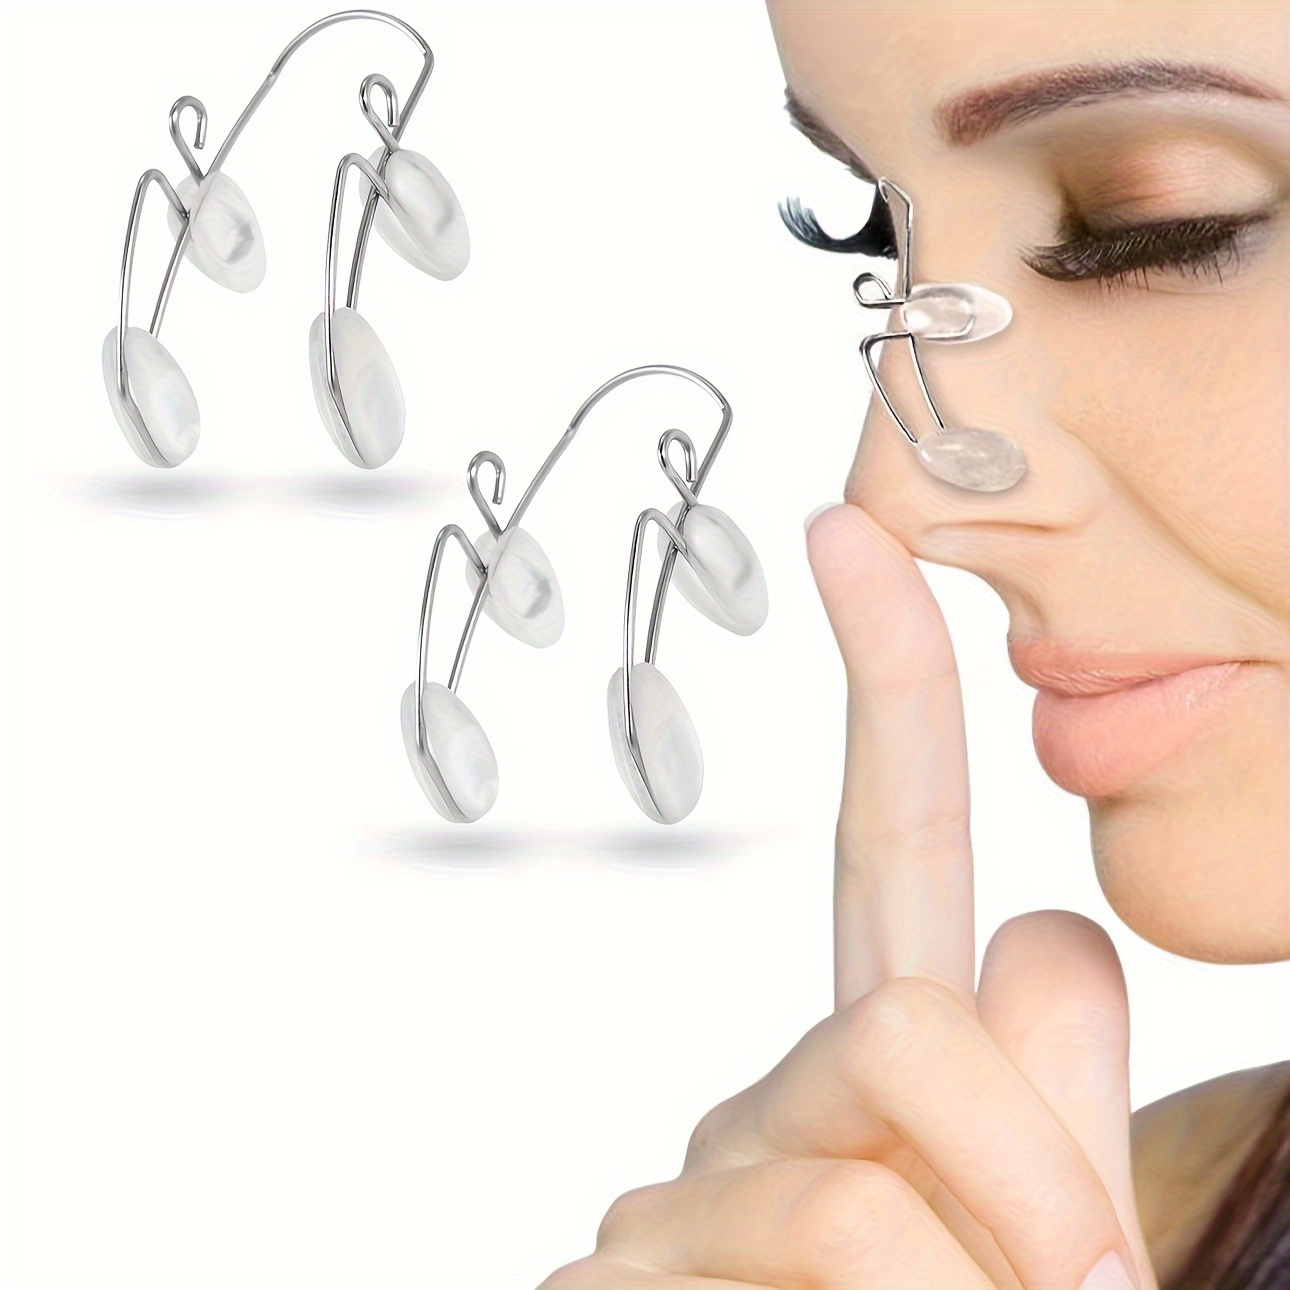 

1/2pcs Nose Shaper Clip, Nose Bridge Straightener Corrector, Nose Lifter Device Nose Up Lifting Clip Beauty Tool